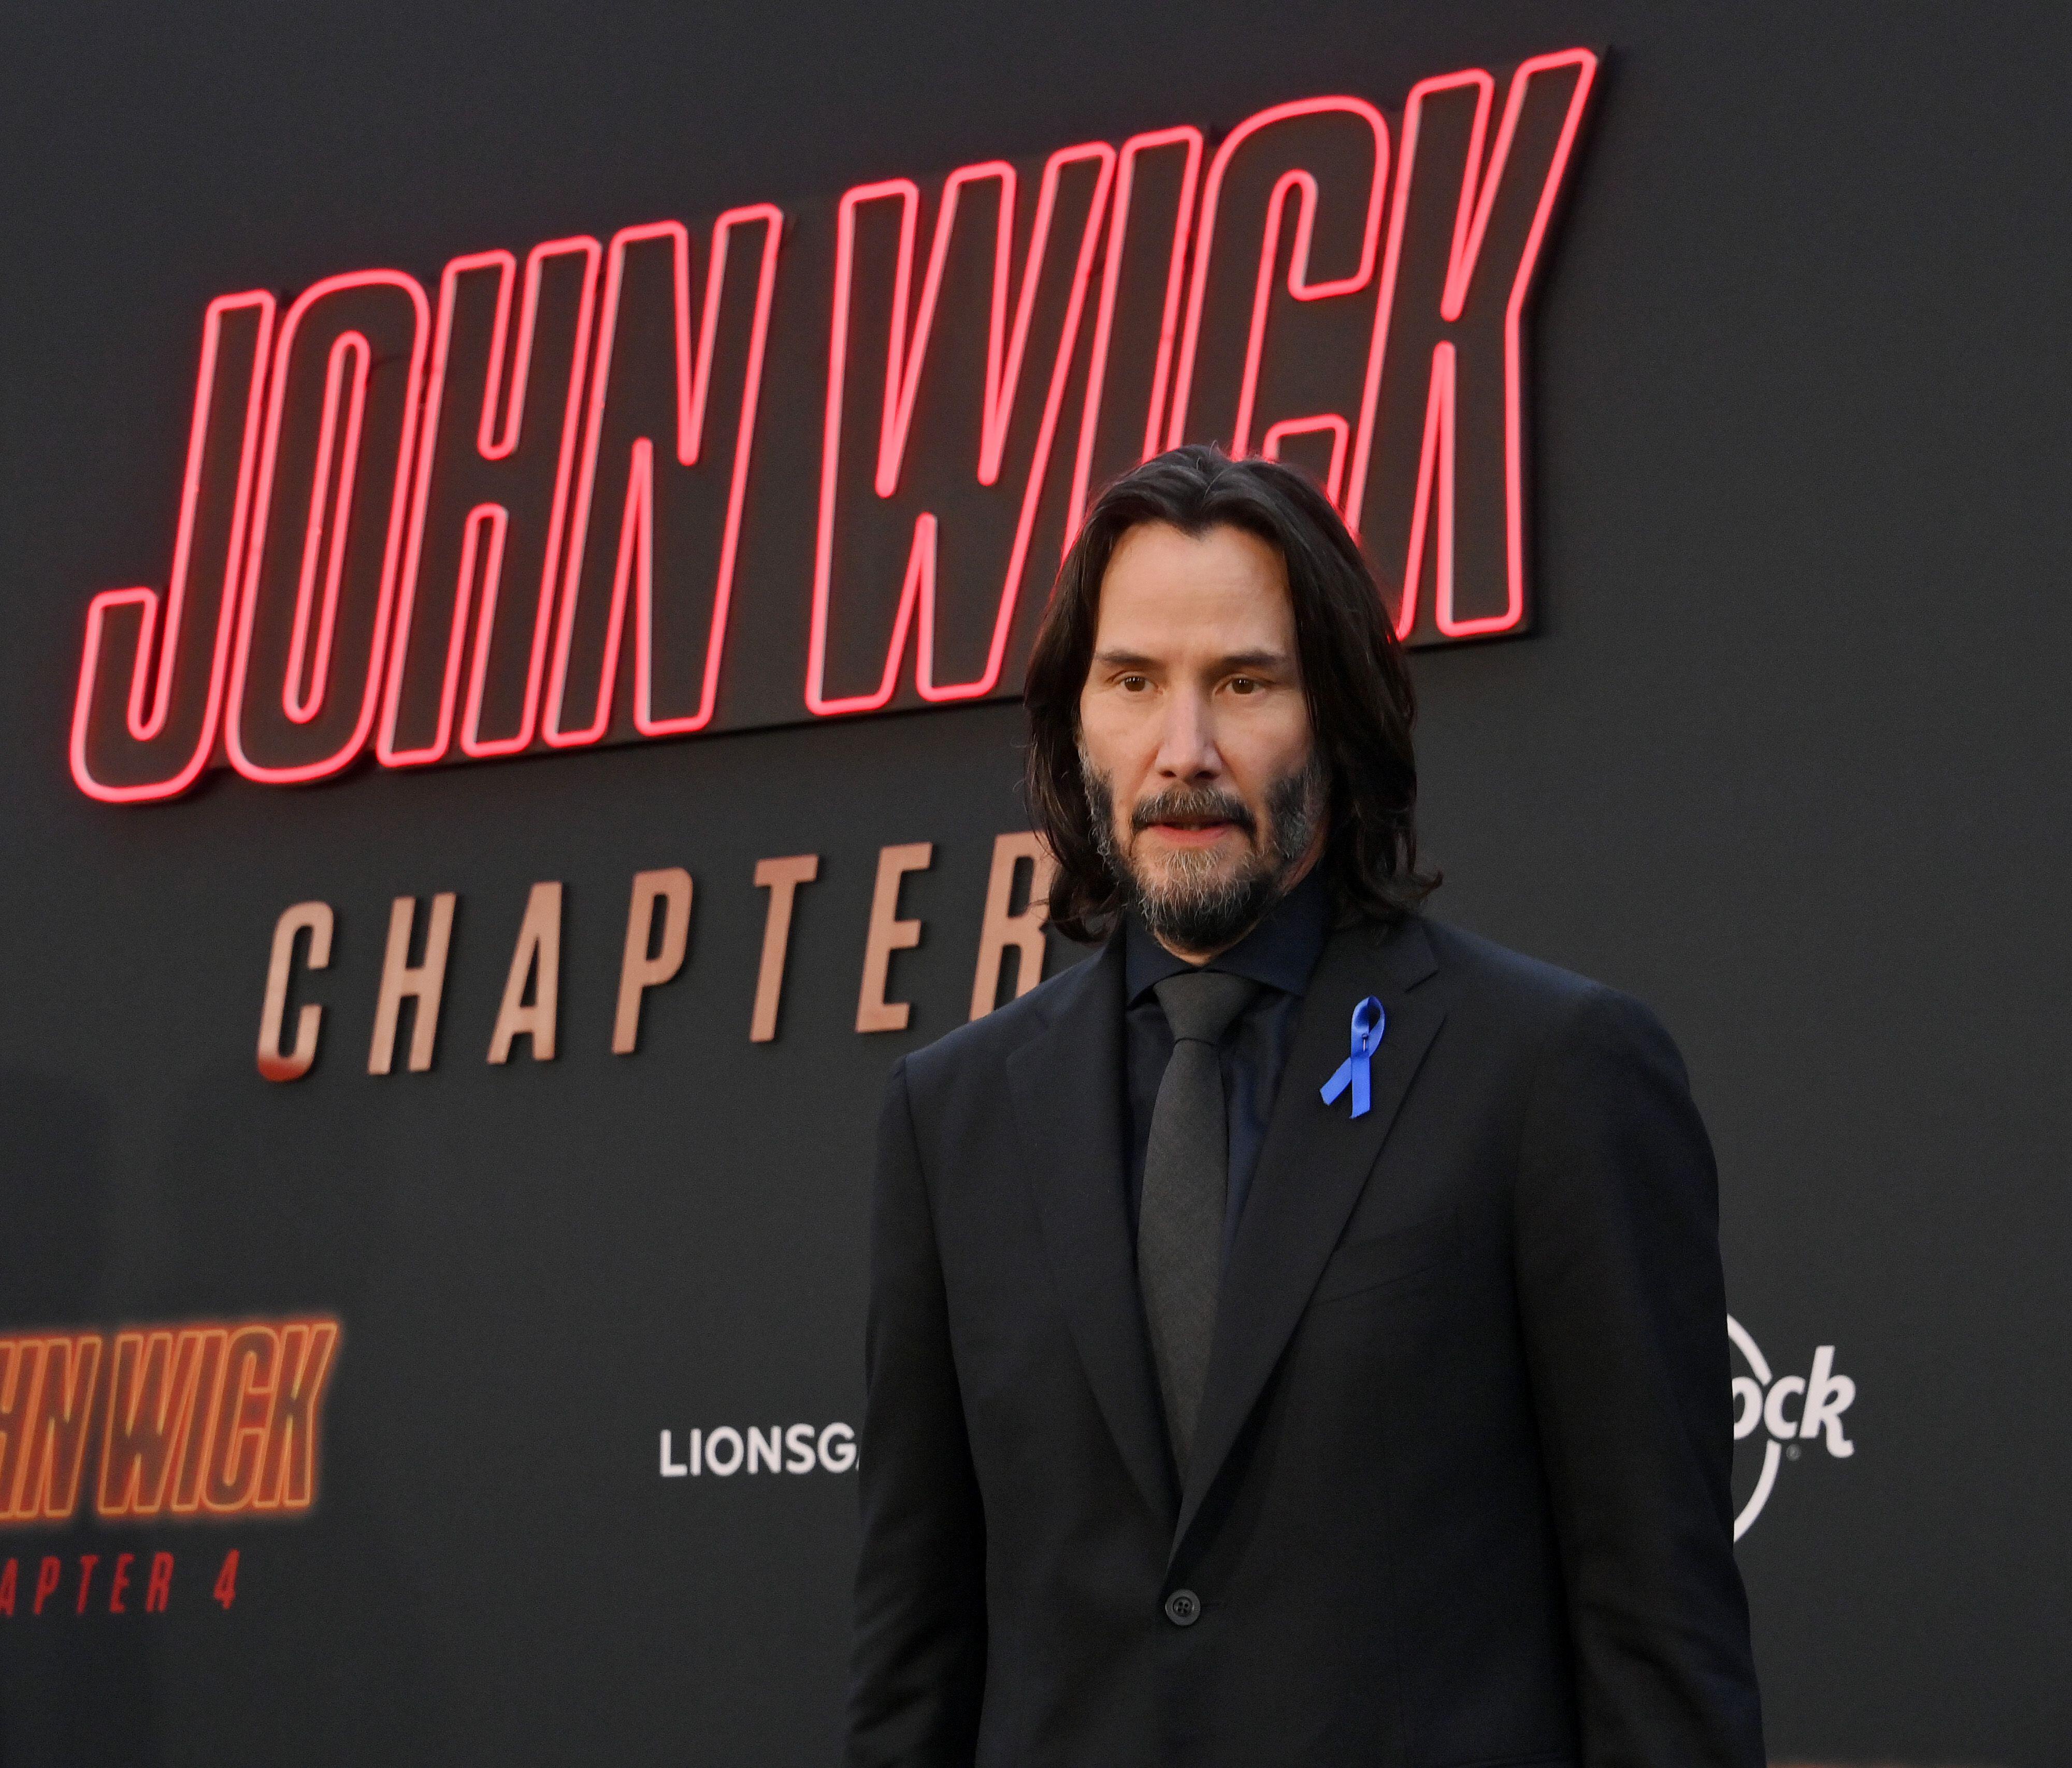 10 Ways John Wick 5 Can Work If Keanu Reeves Doesn't Return in 2023